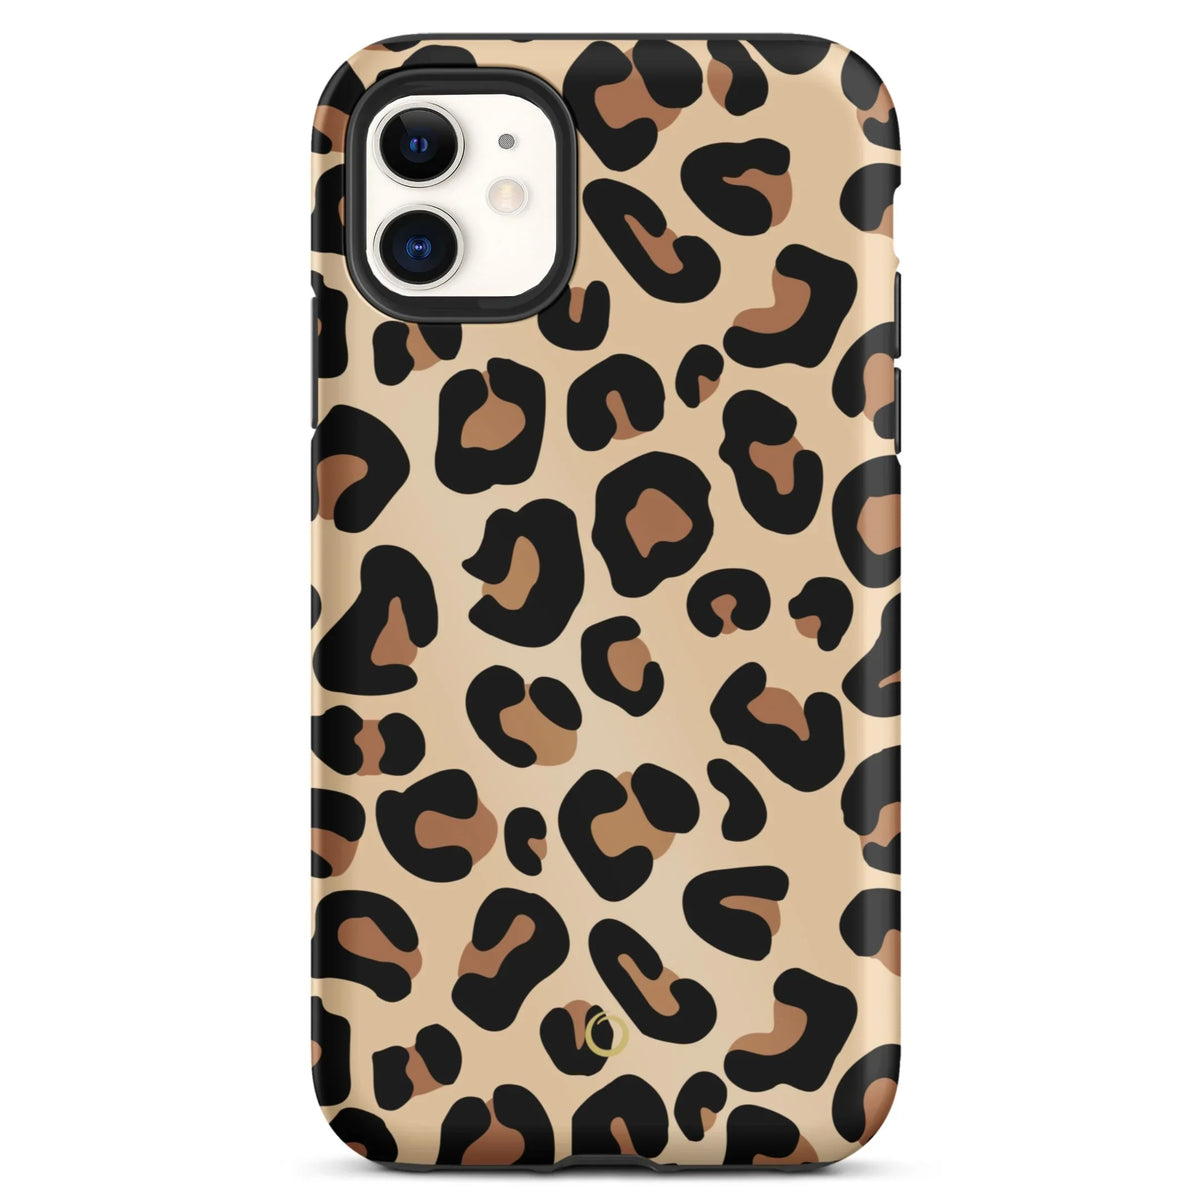 Wild Leopard iPhone Case - iPhone 12